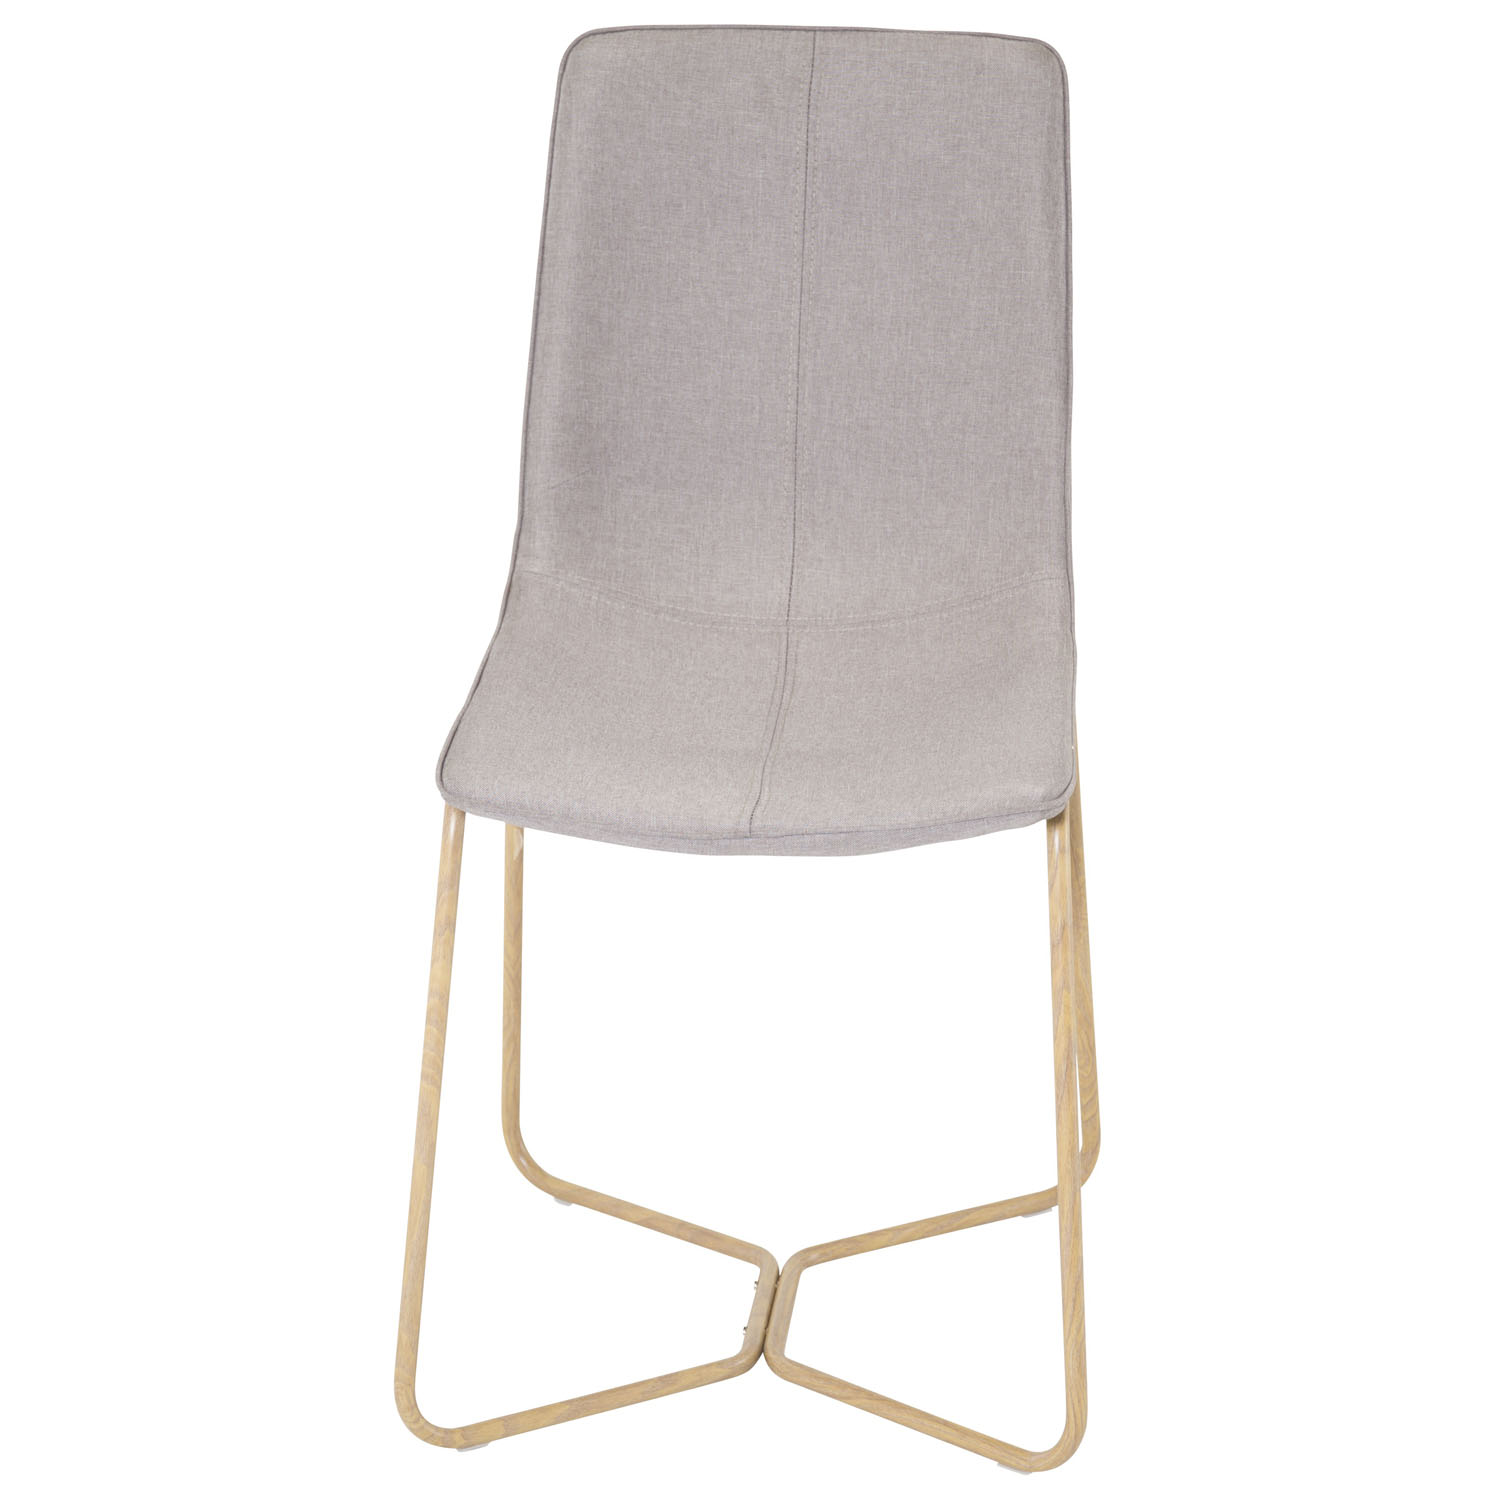 VENTURE DESIGN X-Chair spisebordsstol - grå polyester og natur metal